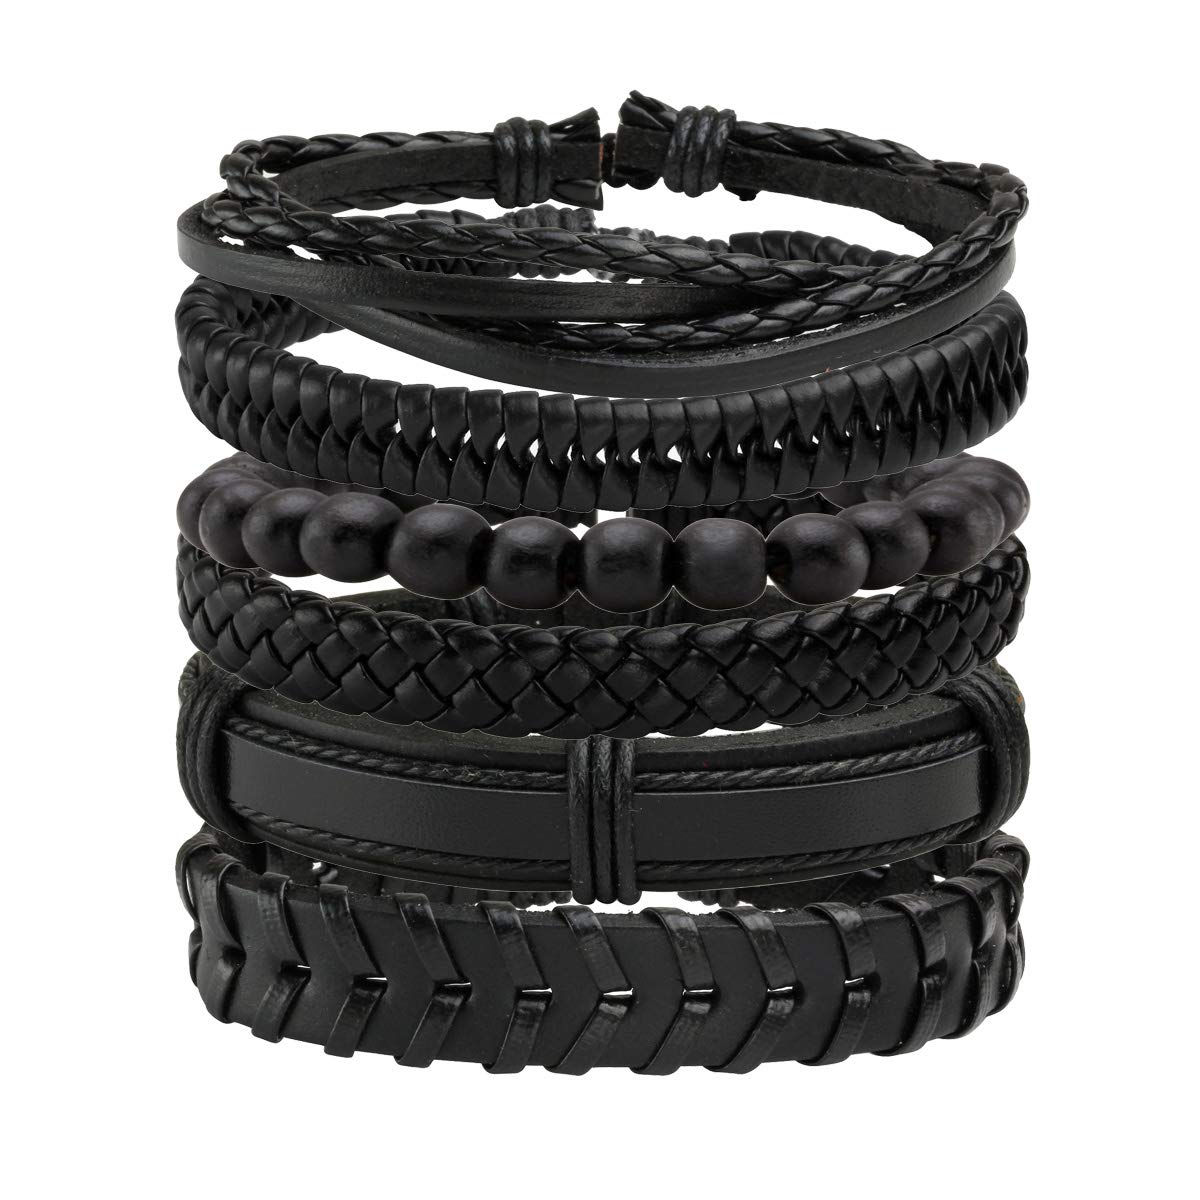 Eigso 6Pcs Braided Leather Bracelets Men Women's Bangles Punk Cuff Wrap Wristbands Adjustable